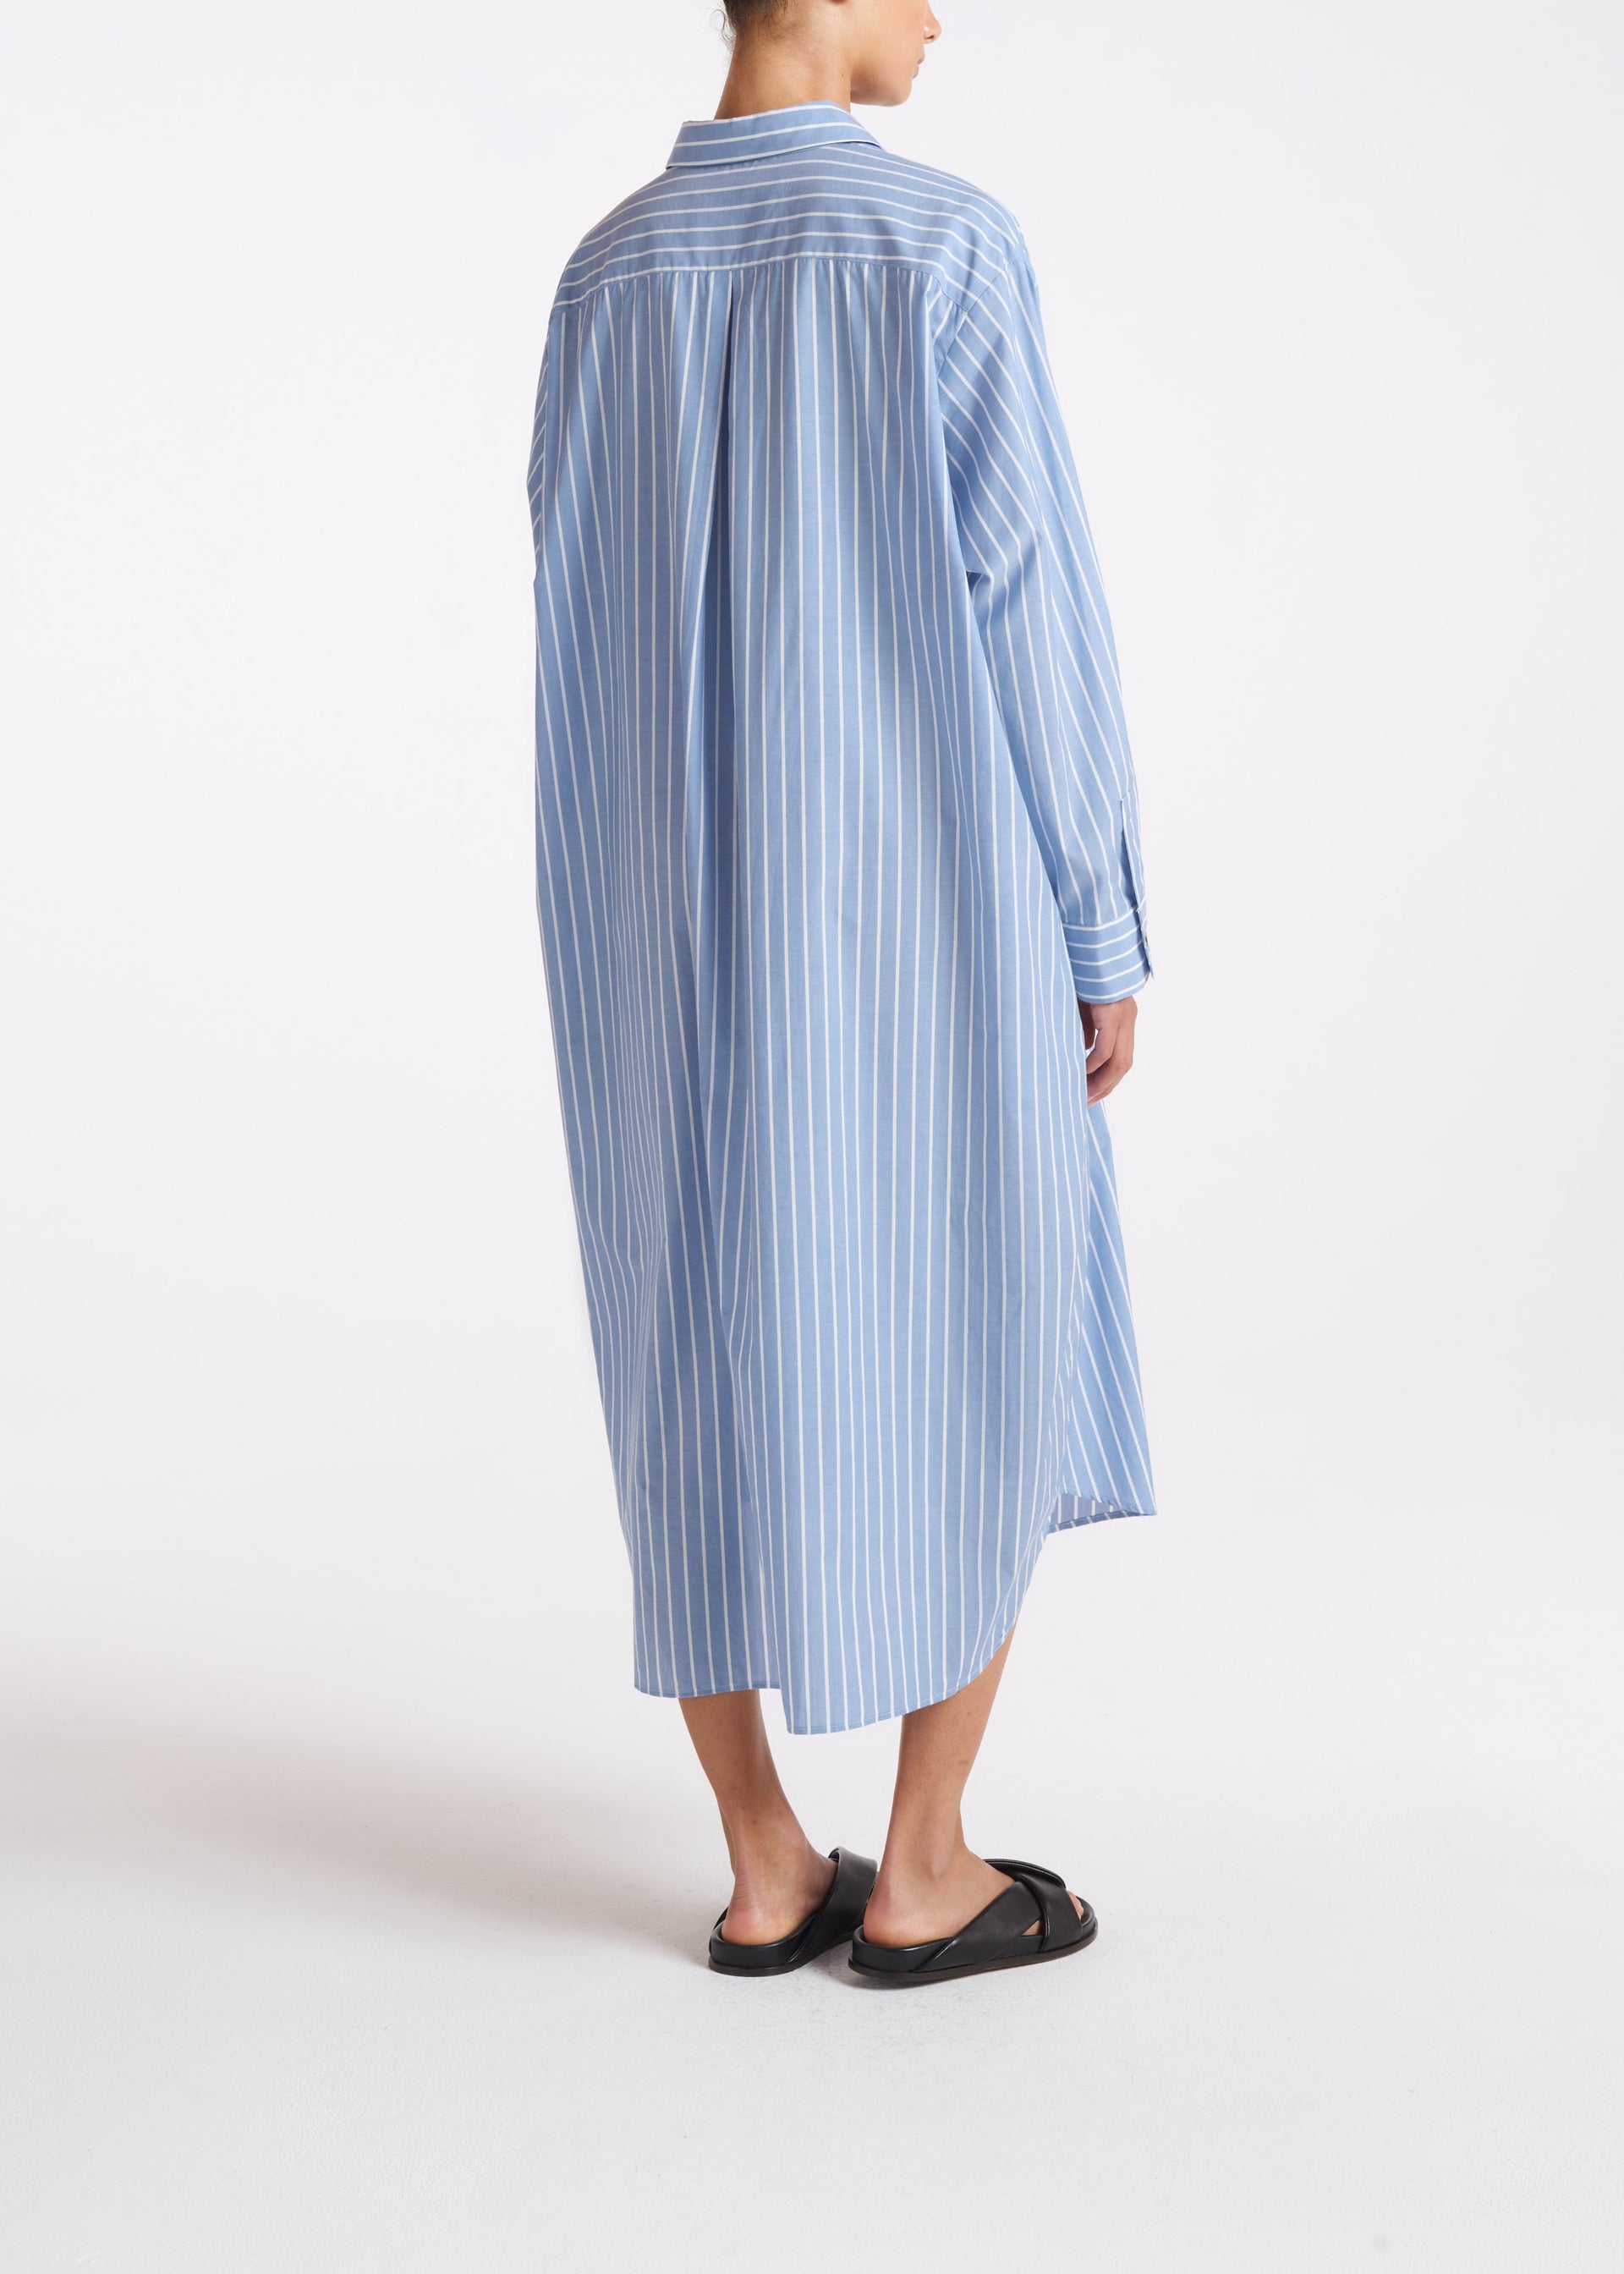 Allegra Blue & White Stripe Cotton Silk Shirt Dress